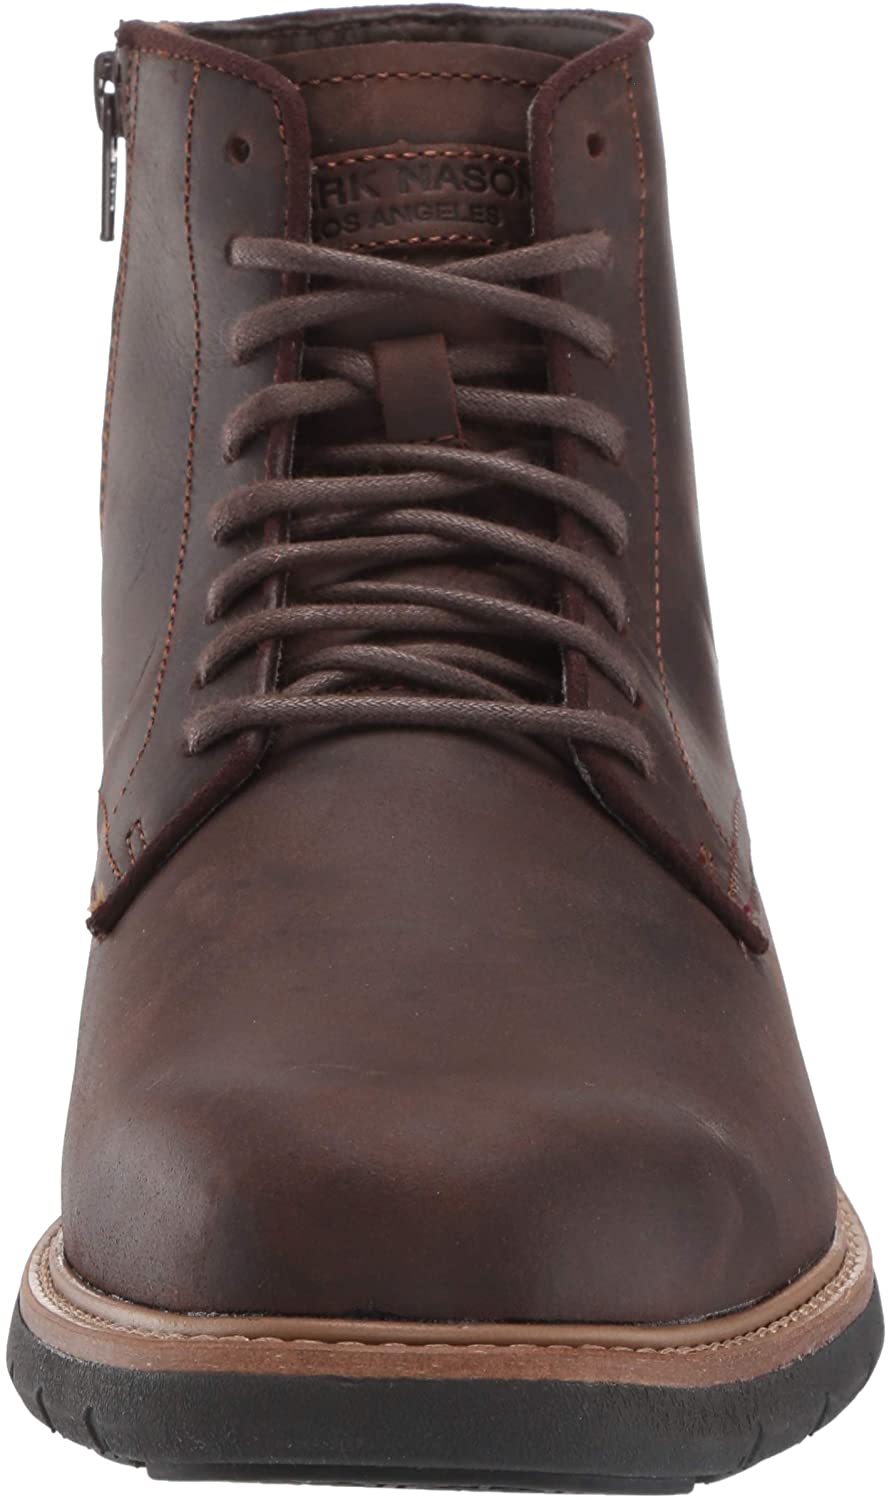 Mark Nason Lite Lugg-Alamos Men's Boot, Dark Brown, Size 10.5 Anga | eBay